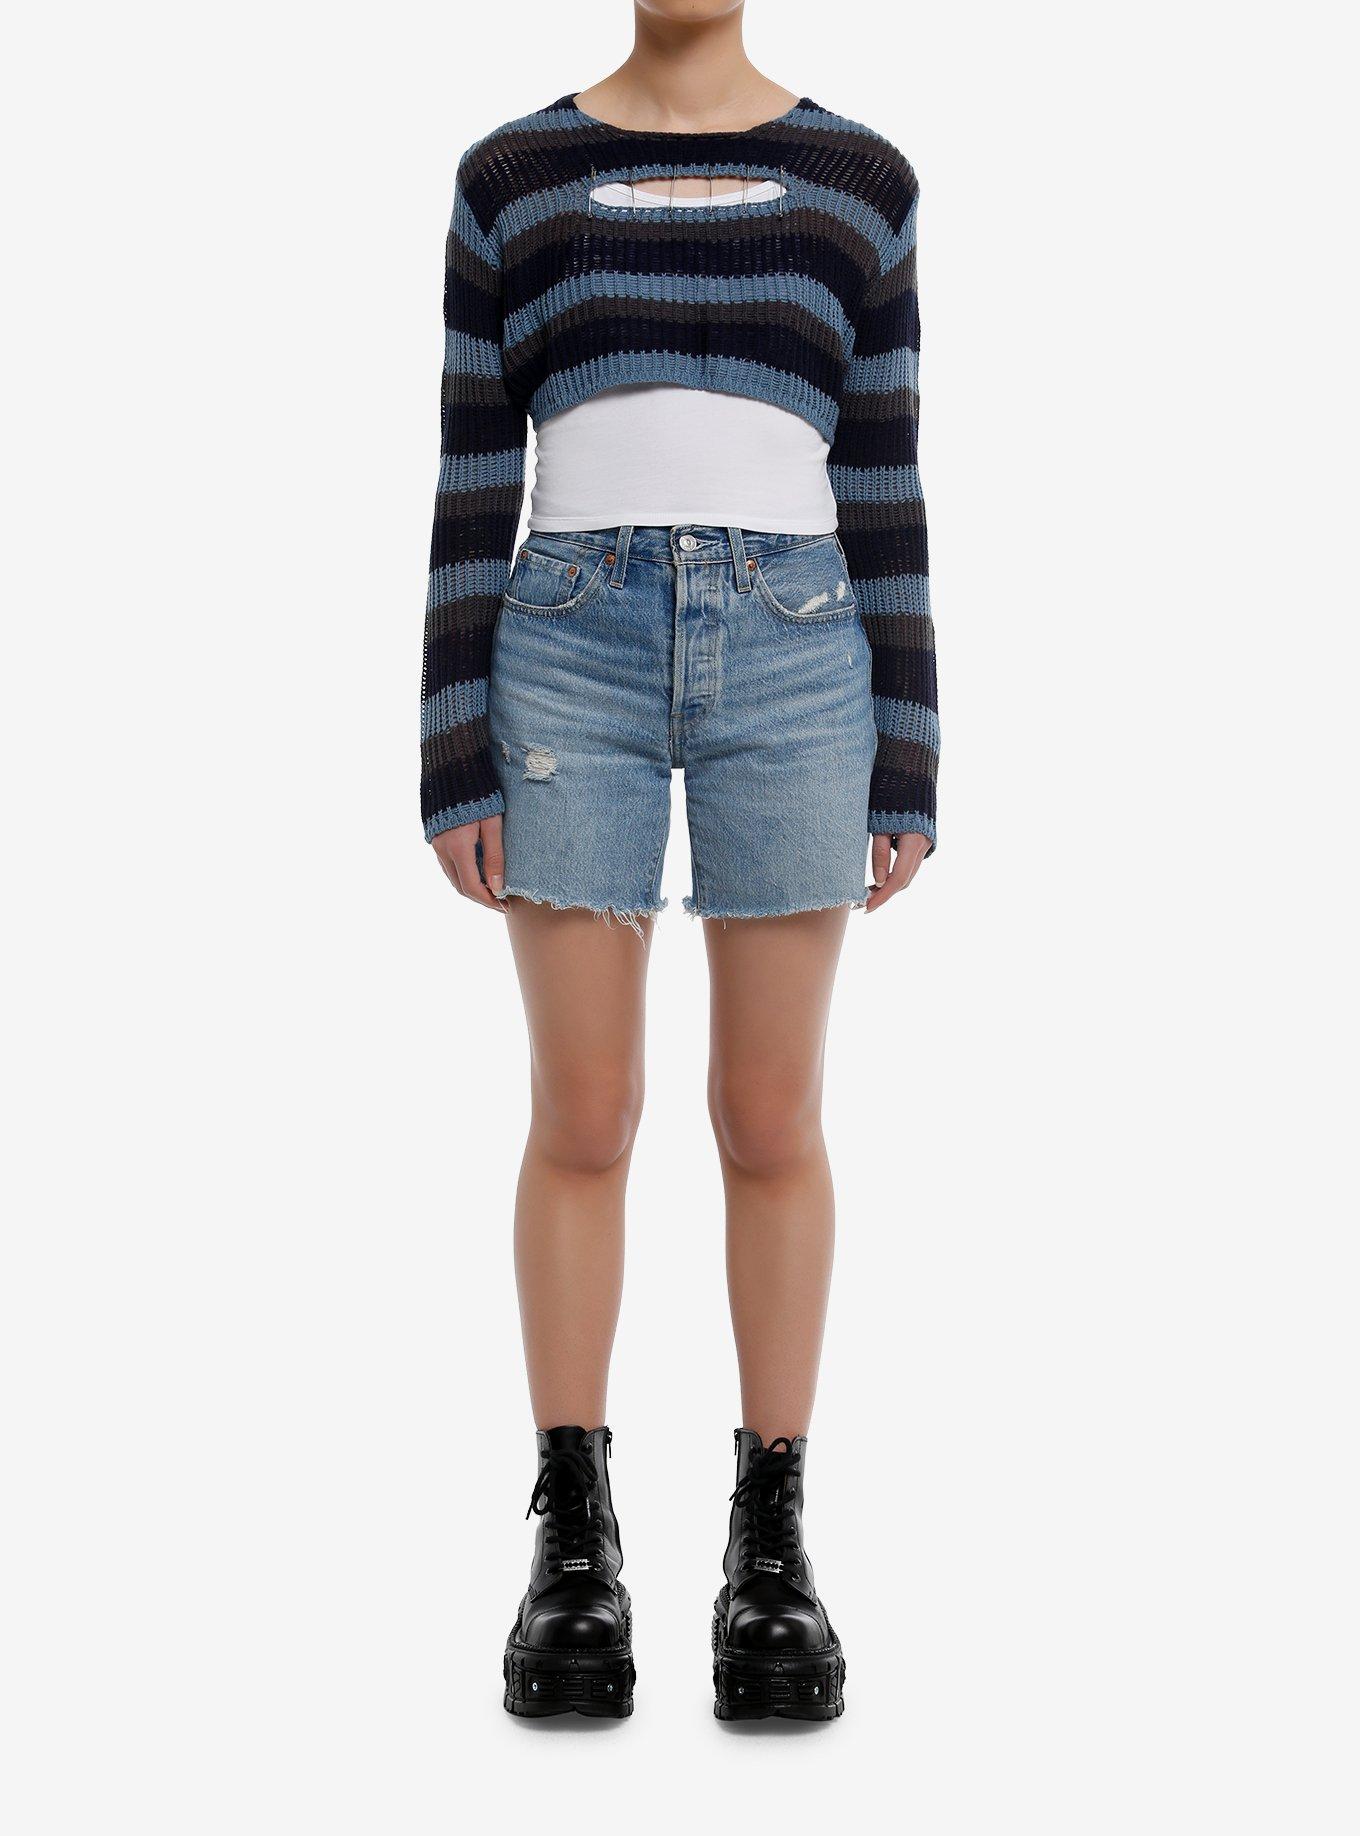 Social Collision® Blue & Grey Stripe Safety Pin Bolero Girls Crop Sweater